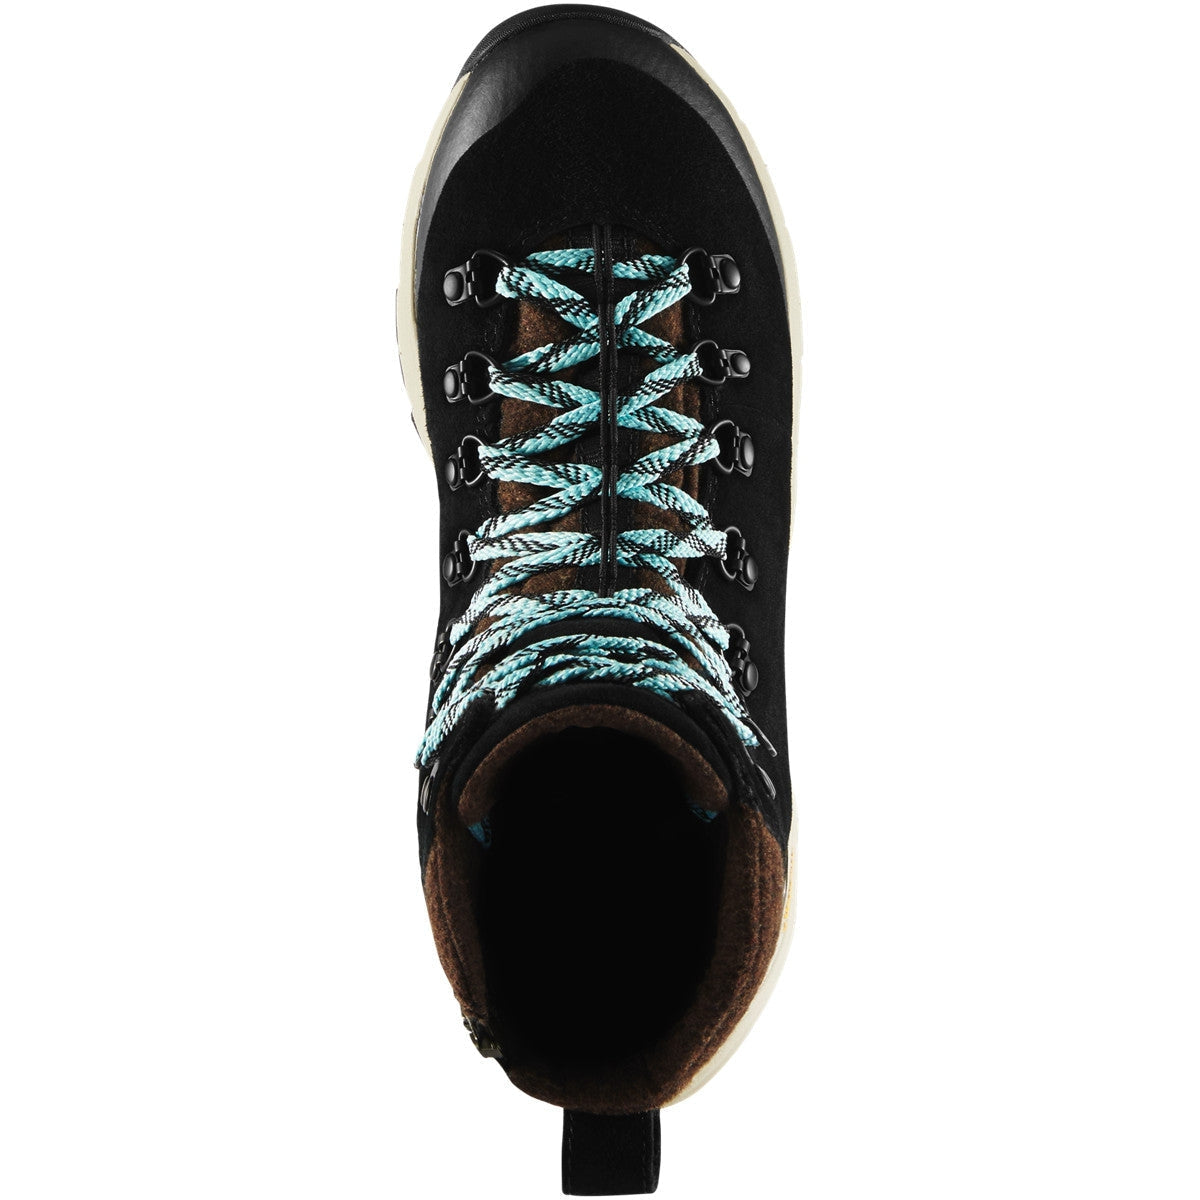 Danner Women's Arctic 600 7" WP Hiking Boot - Black/Spark Blue - 67340  - Overlook Boots